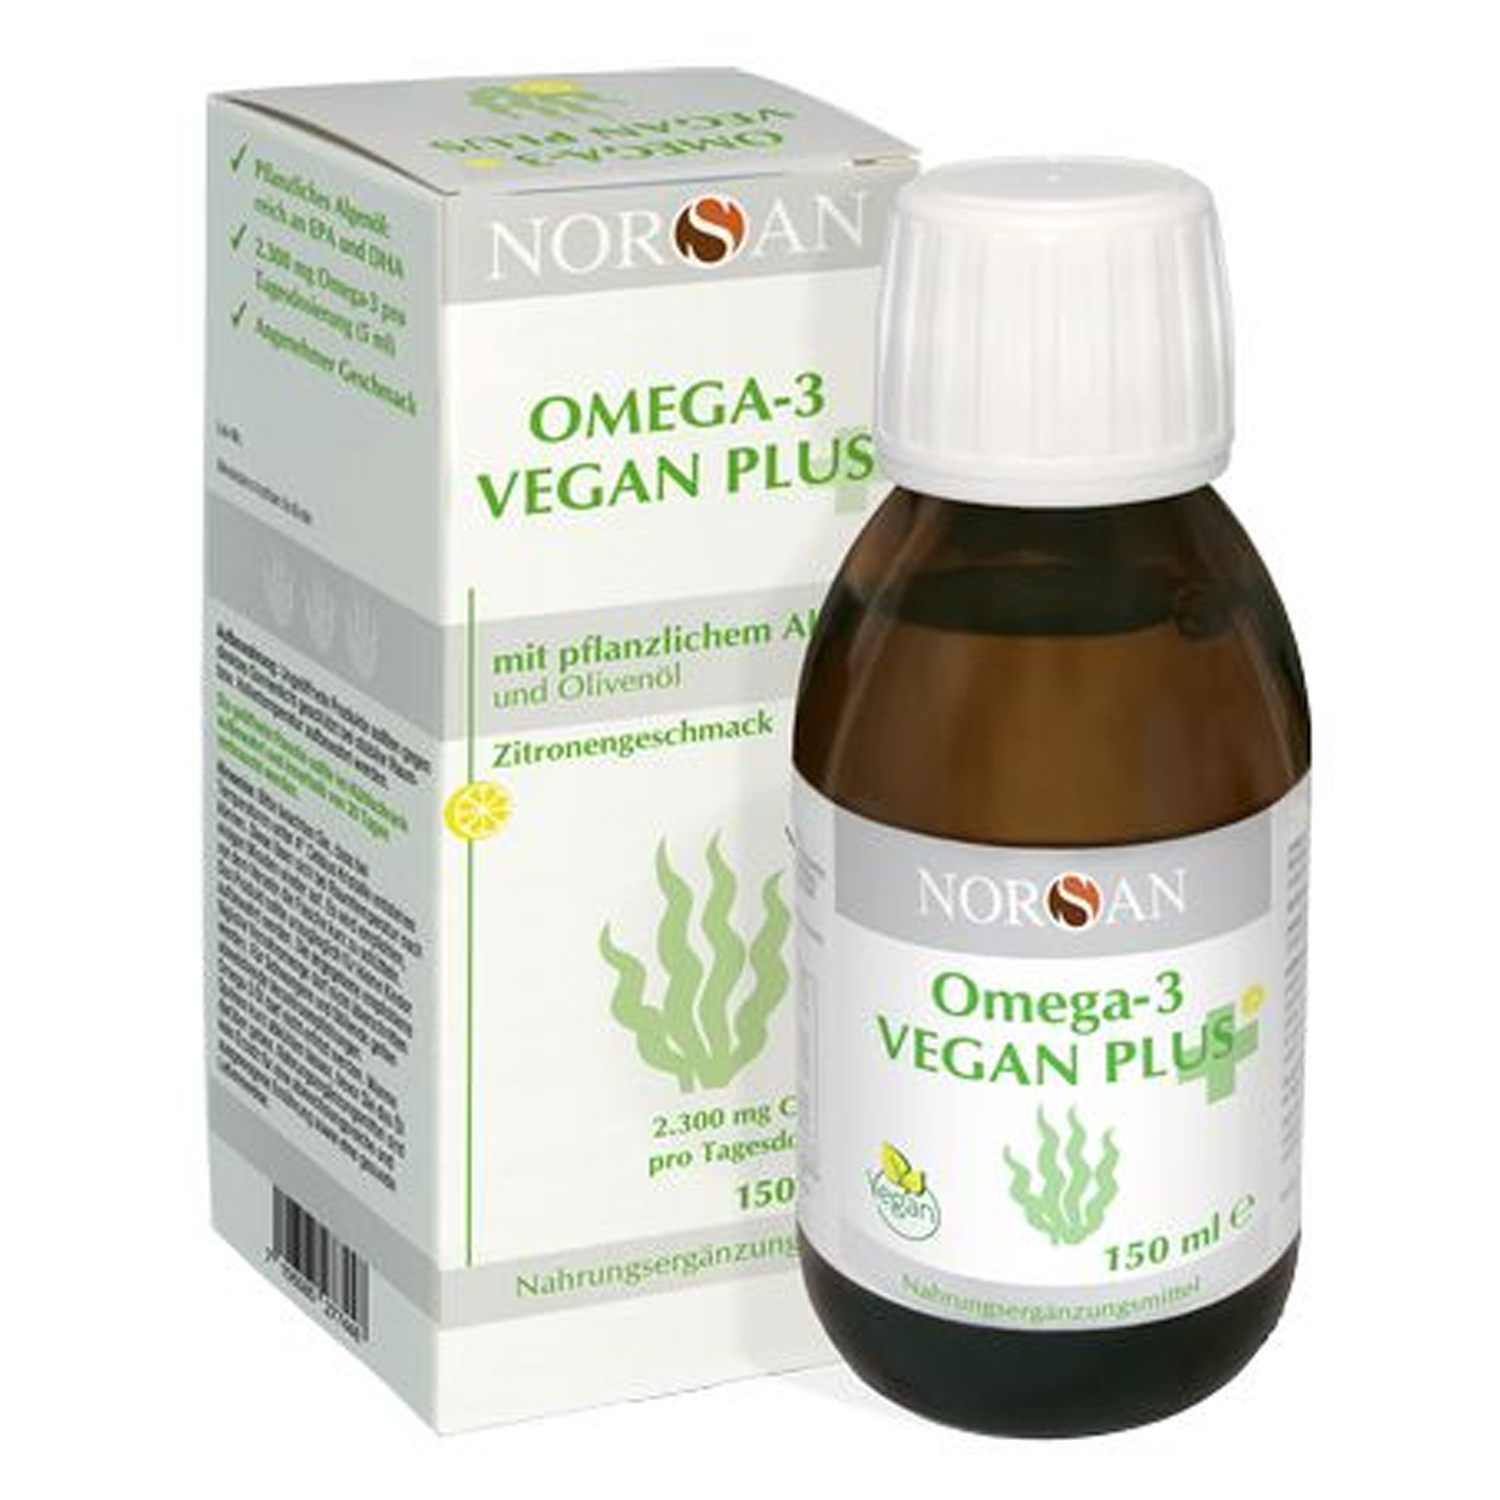 Omega-3 Vegan Plus von Norsan